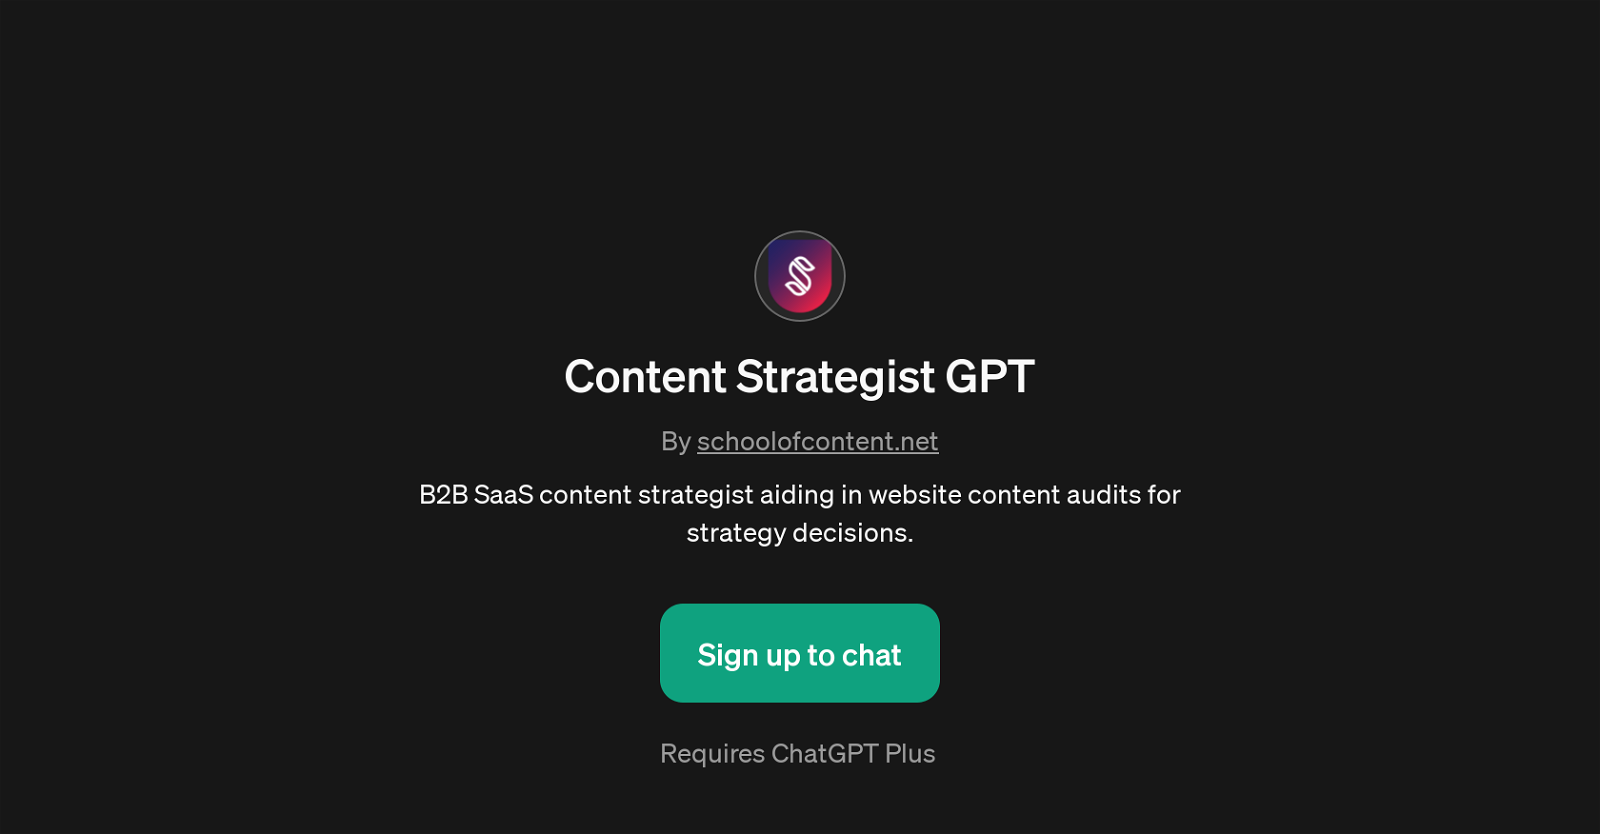 Content Strategist GPT website